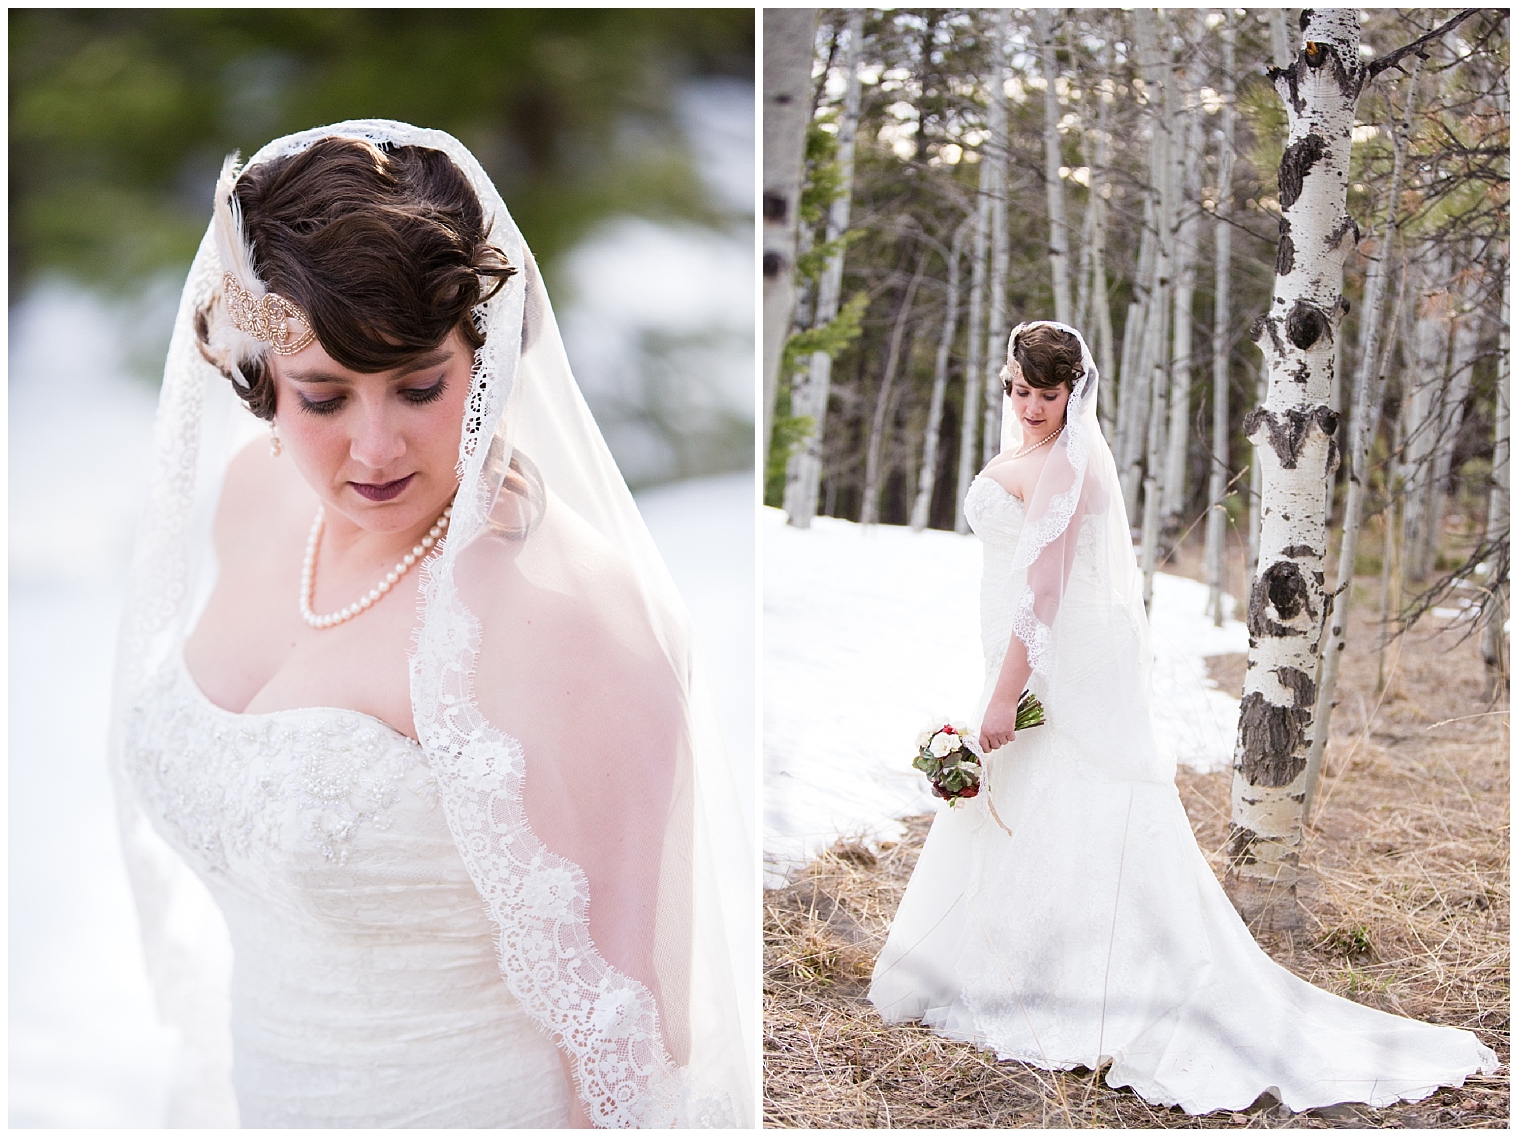 Bride in the snow at her April Boulder elopement.